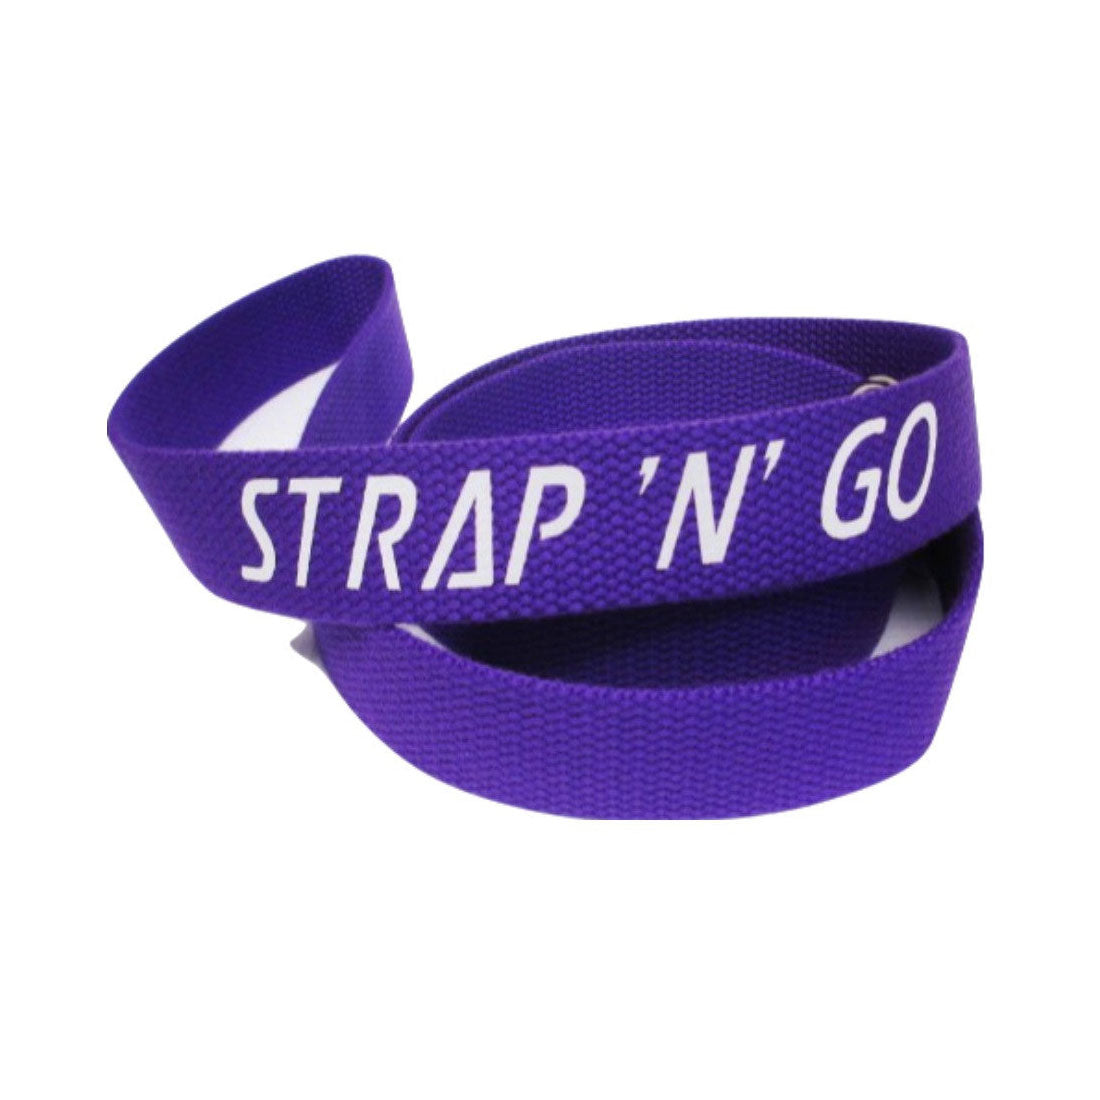 Strap N Go Skate Noose/Leash - Solid Colours Purple Roller Skate Accessories